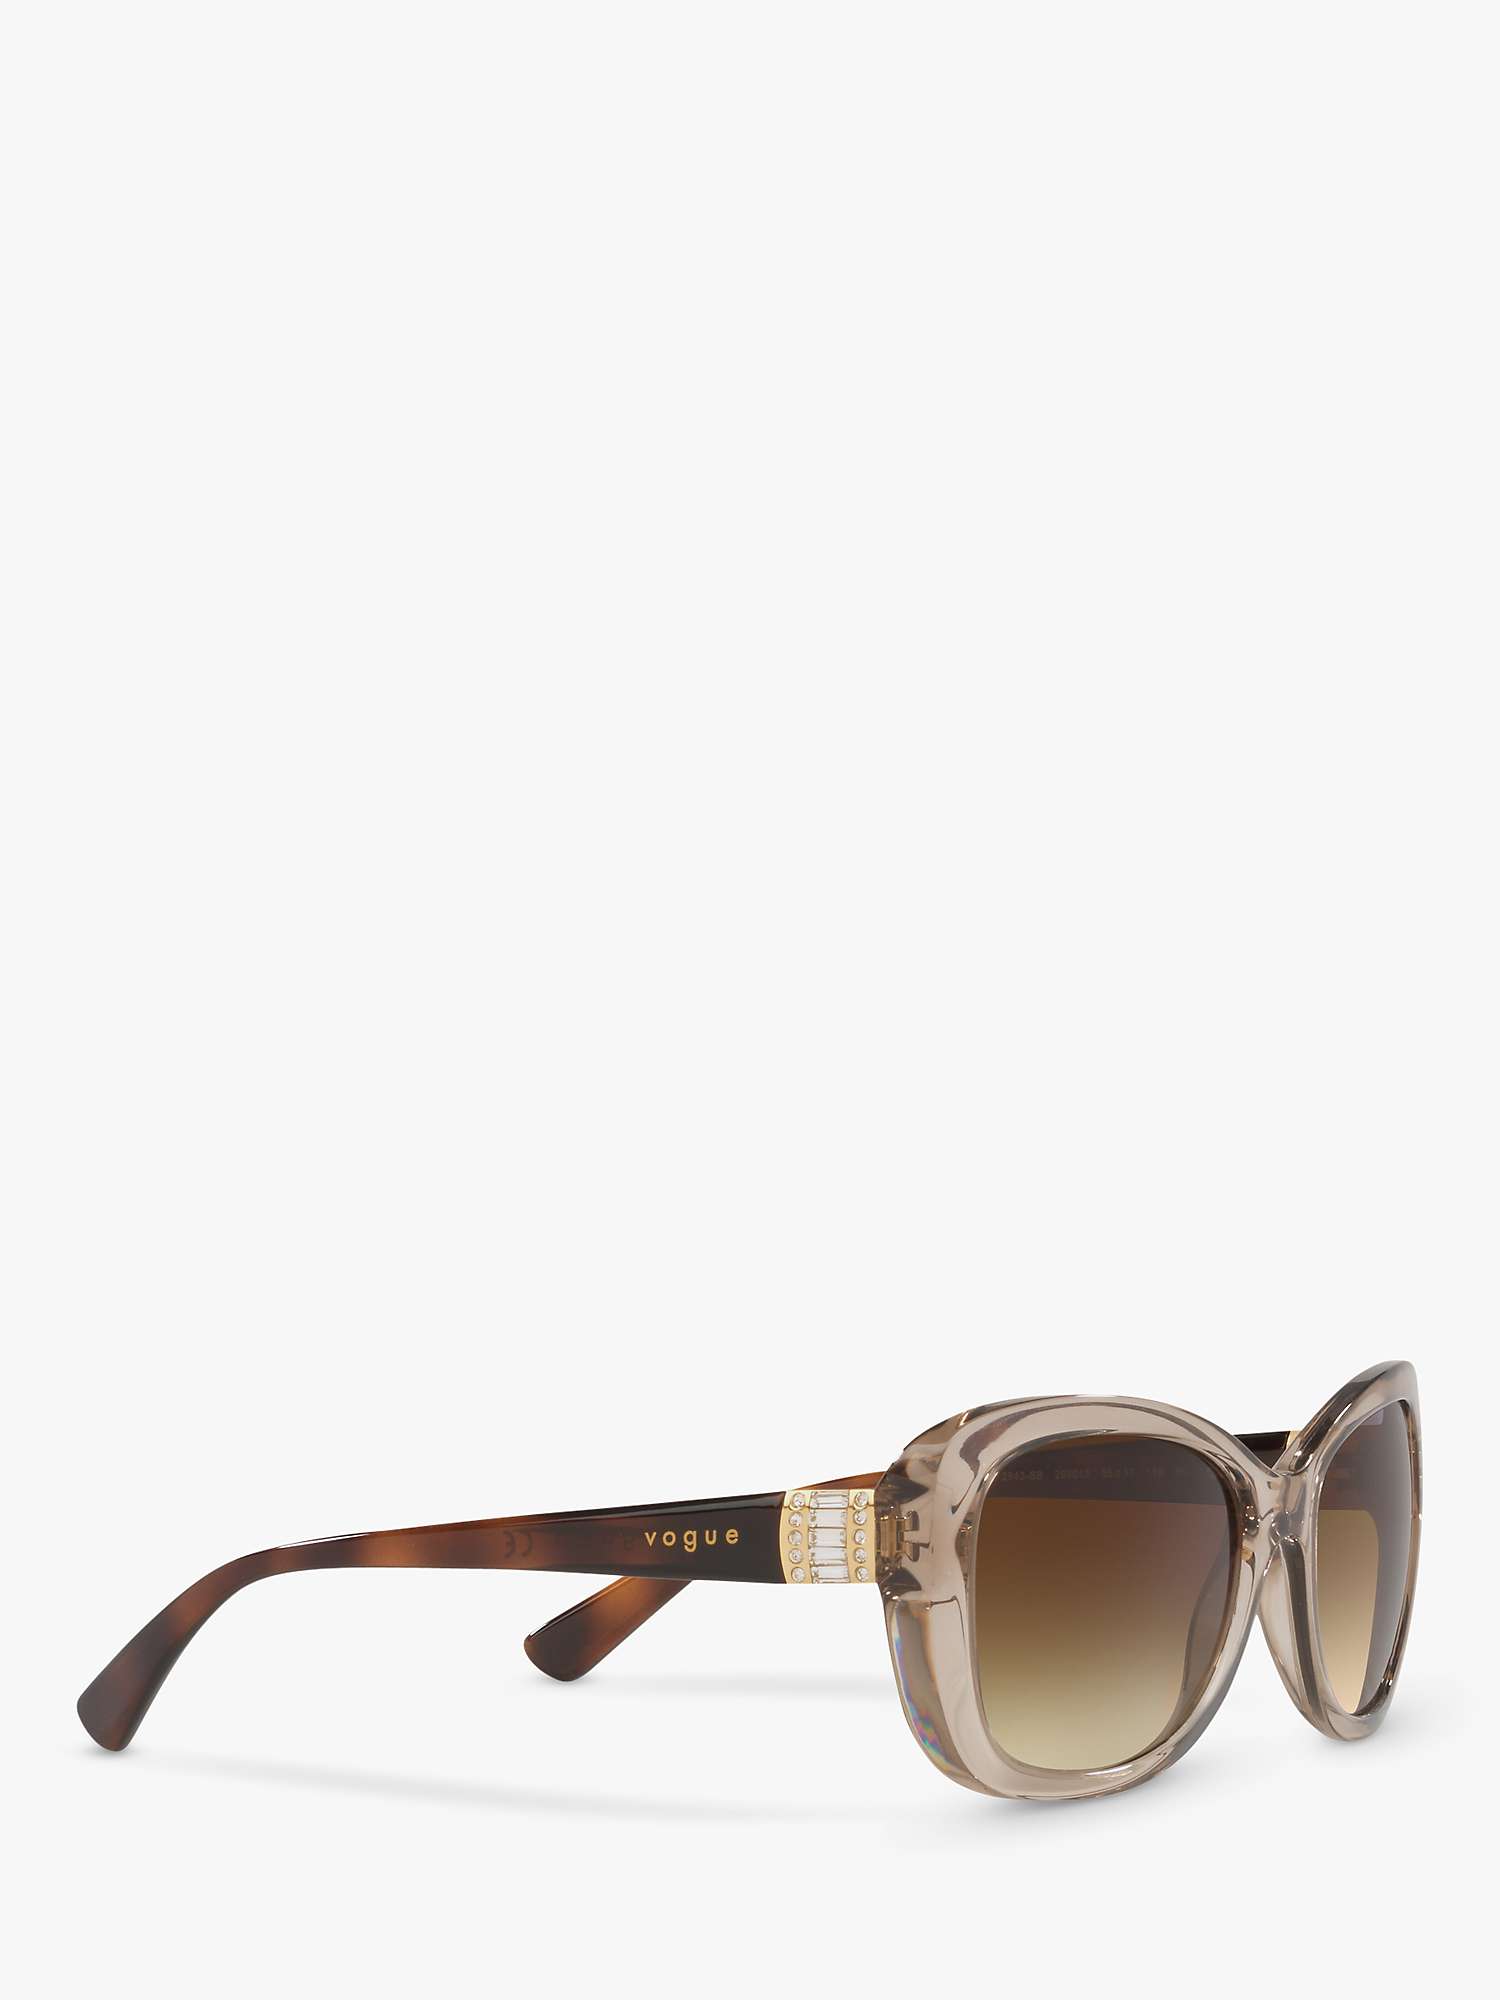 Buy Vogue VO2943SB Women's Butterfly Sunglasses, Transparent Light Brown/Brown Gradient Online at johnlewis.com